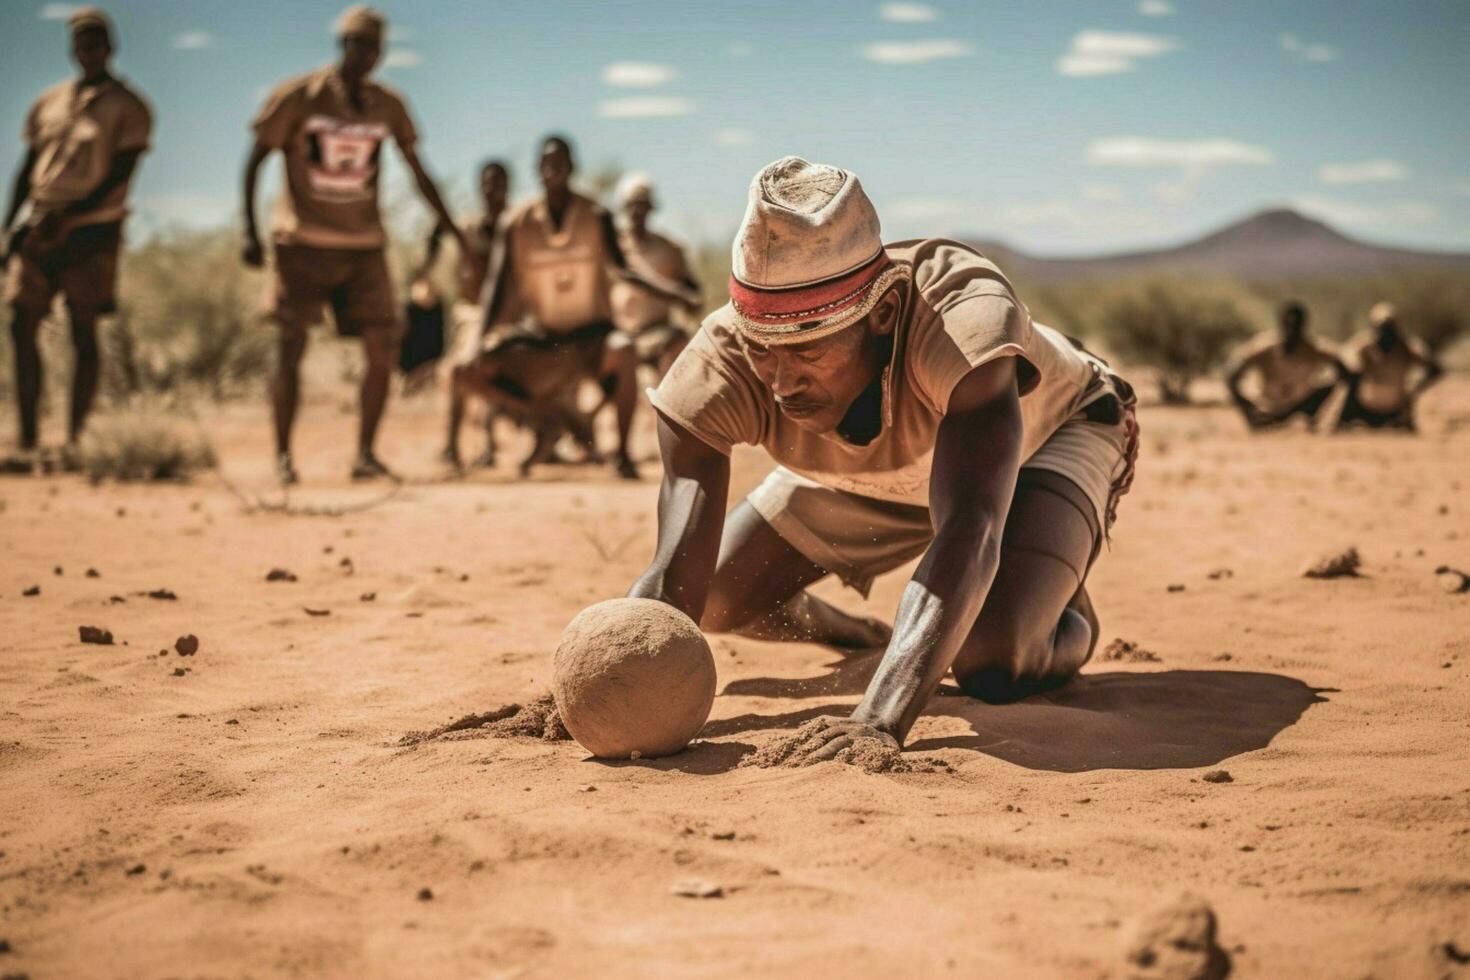 nacional deporte de Namibia foto